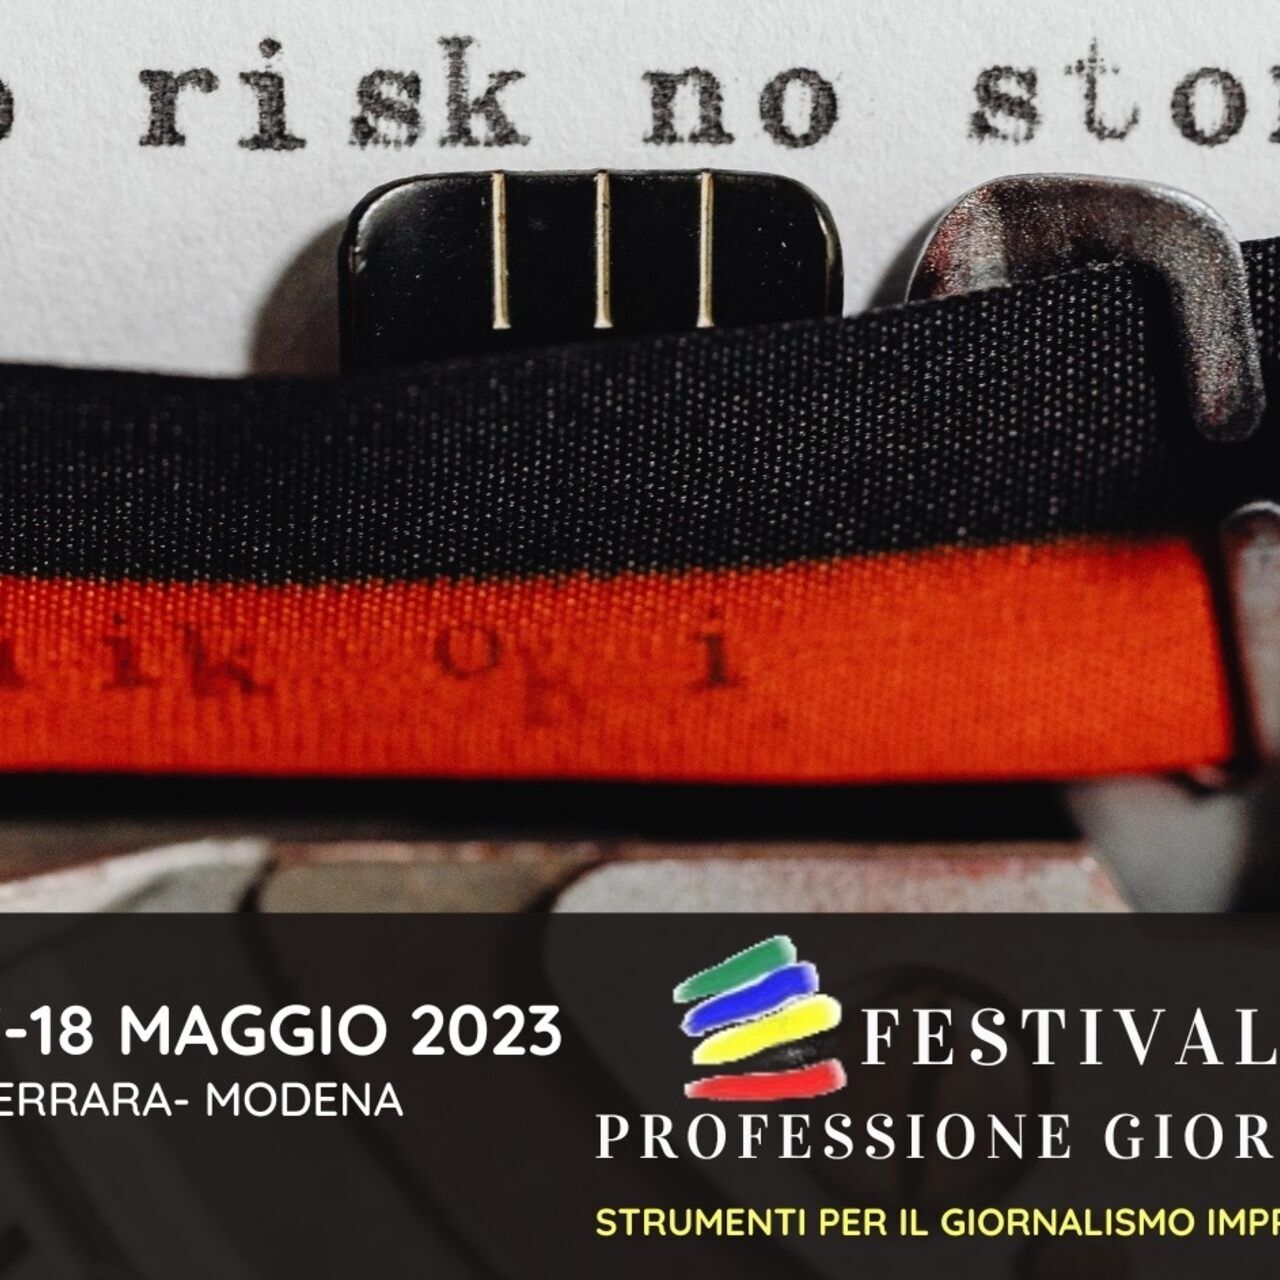 Profesija novinara: ključni vizuelni element festivala "Professione Giornalista" 2023. (Bologna, Ferrara, Modena, 15-16-17-18. maja)